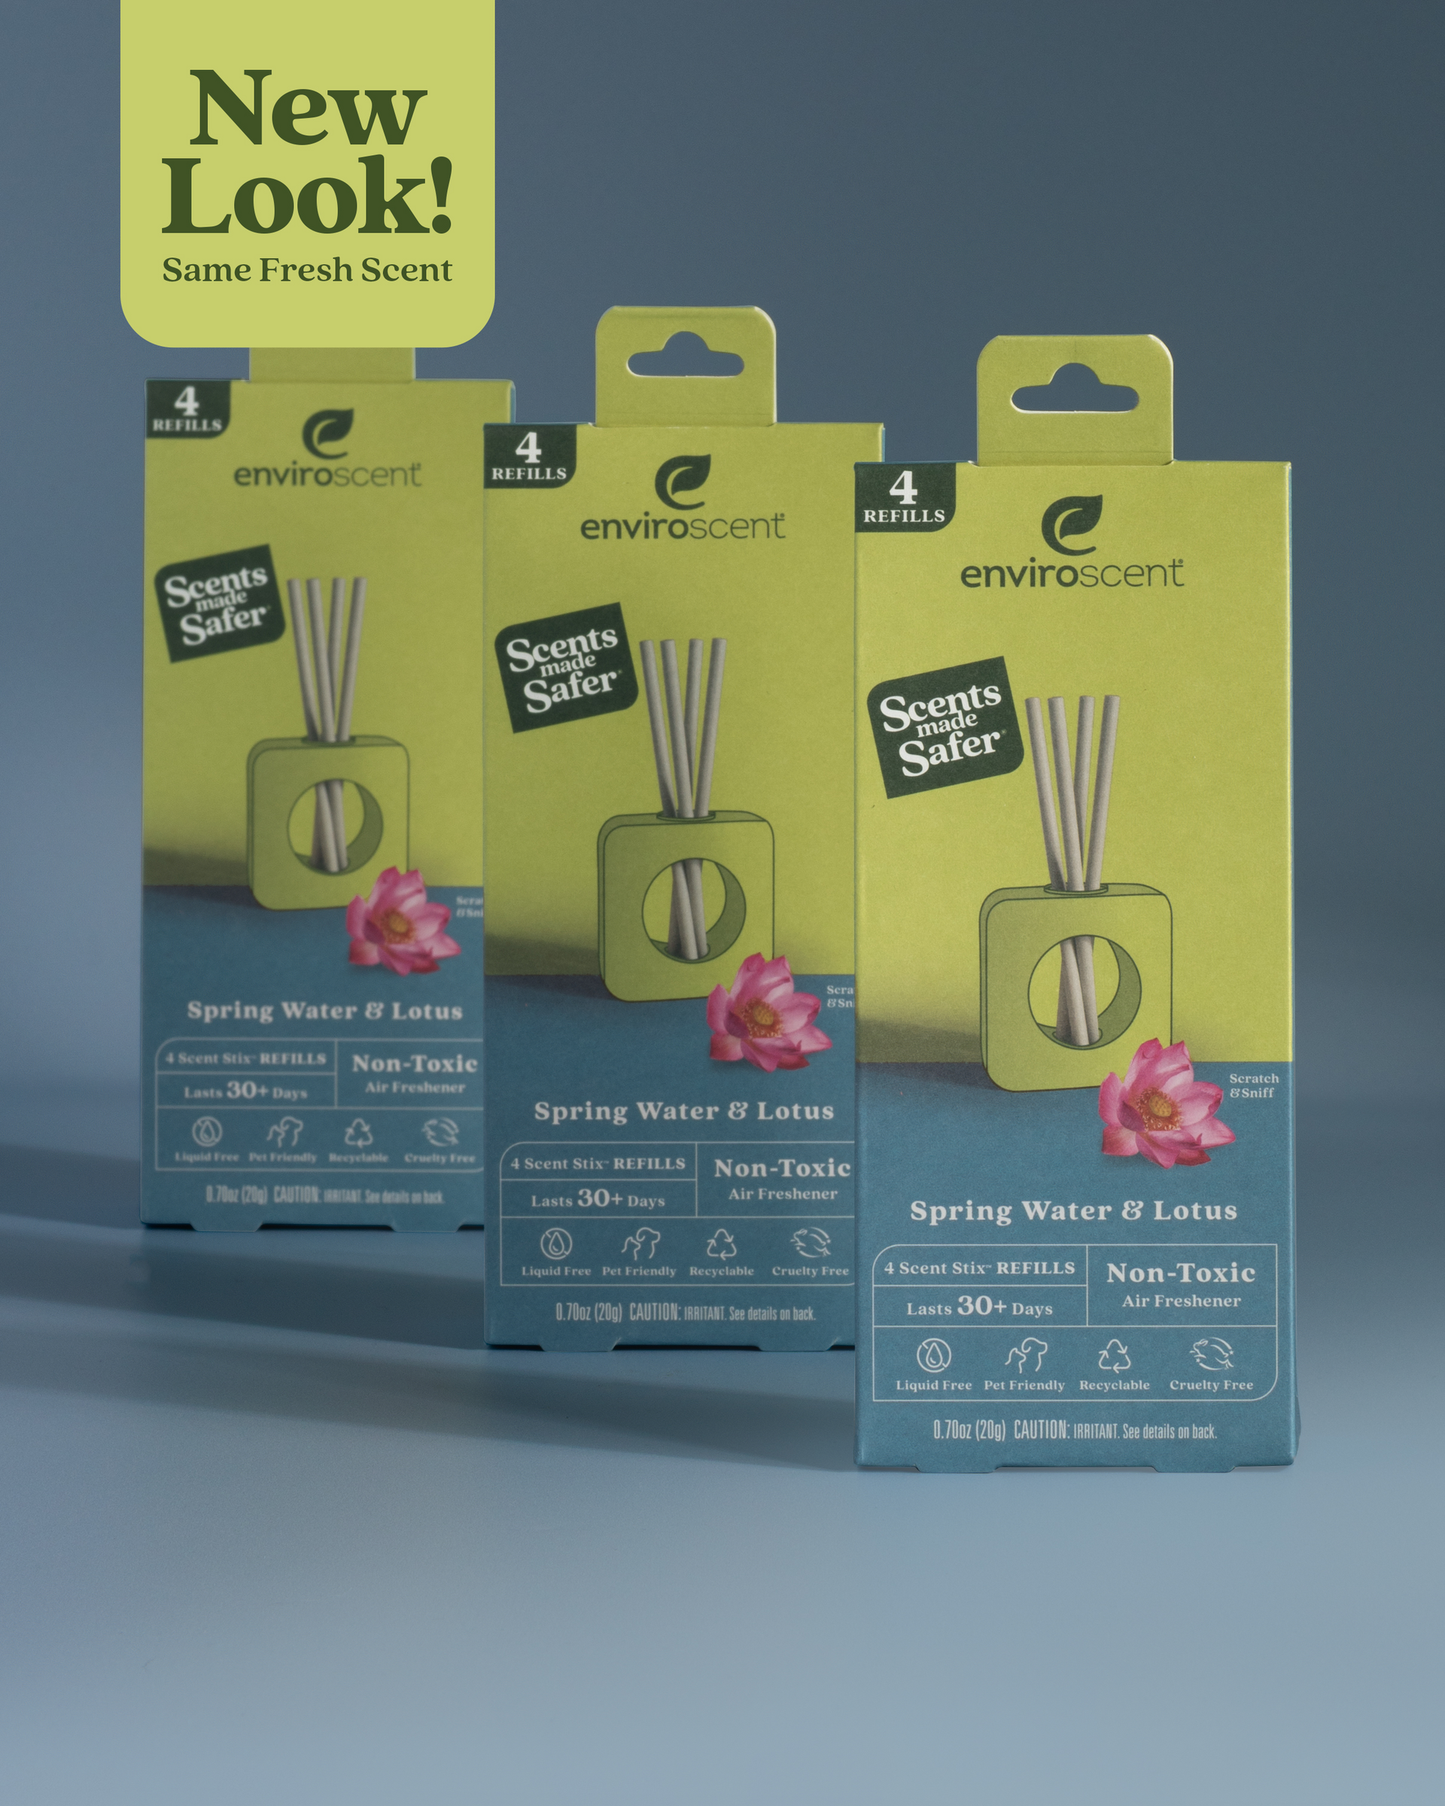 Spring Water & Lotus Scent Stix refill bundle in packaging